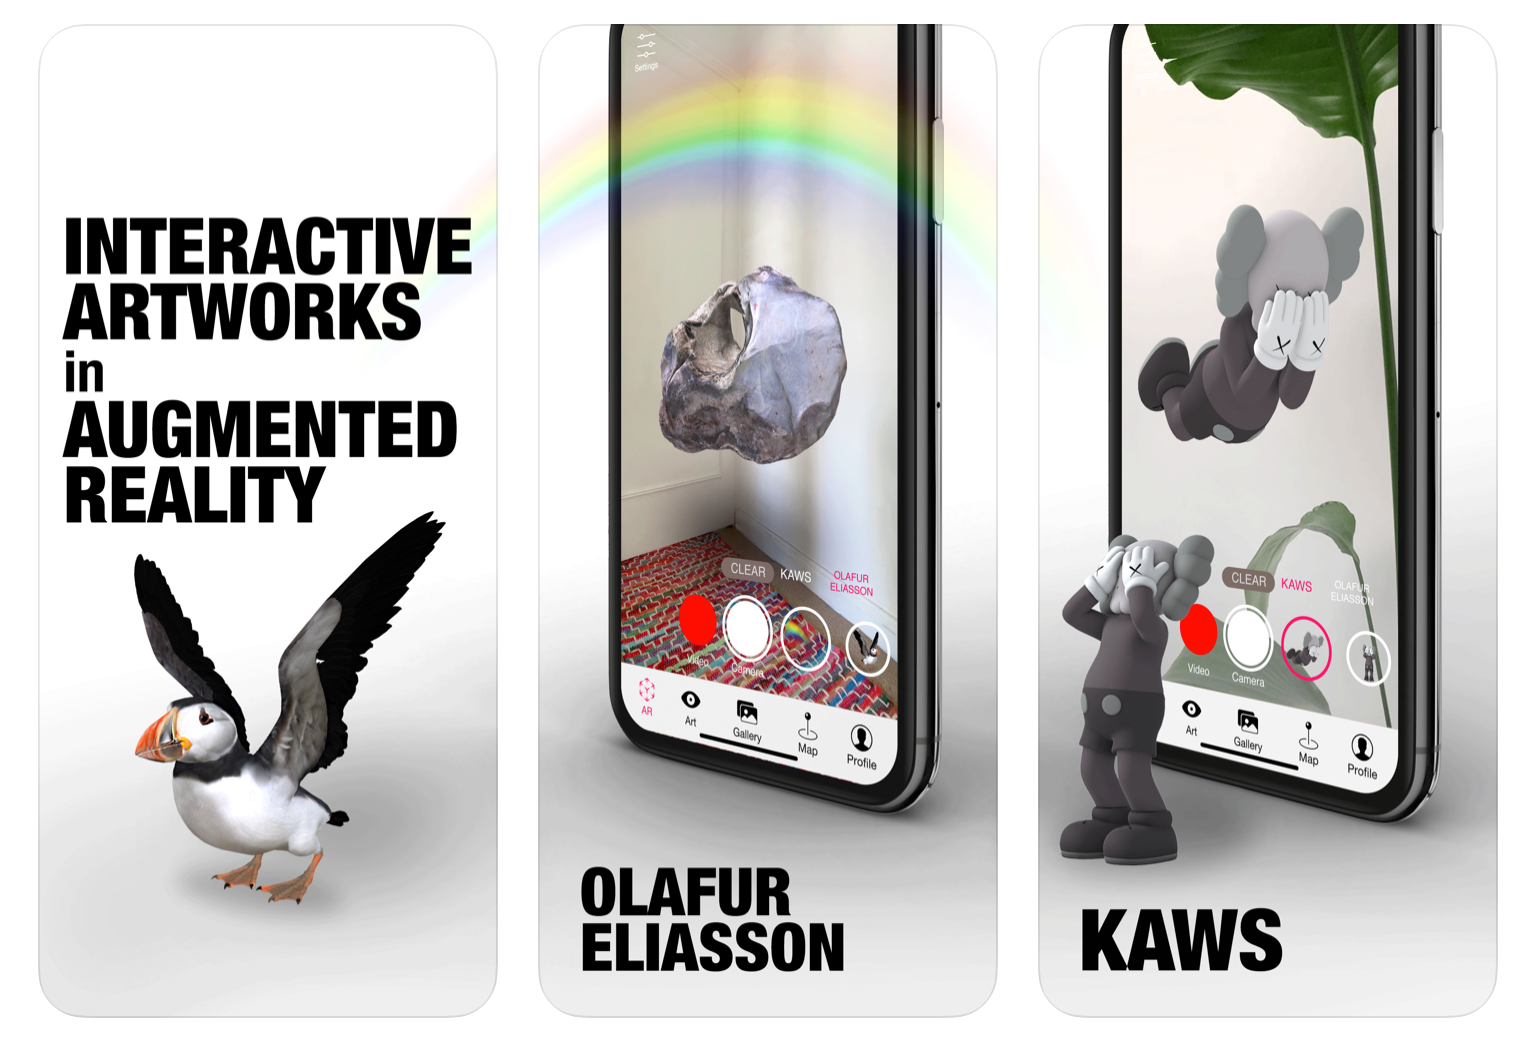 Promotional graphics for Olafur Elliason's newly released Acute Art AR artwork app. 